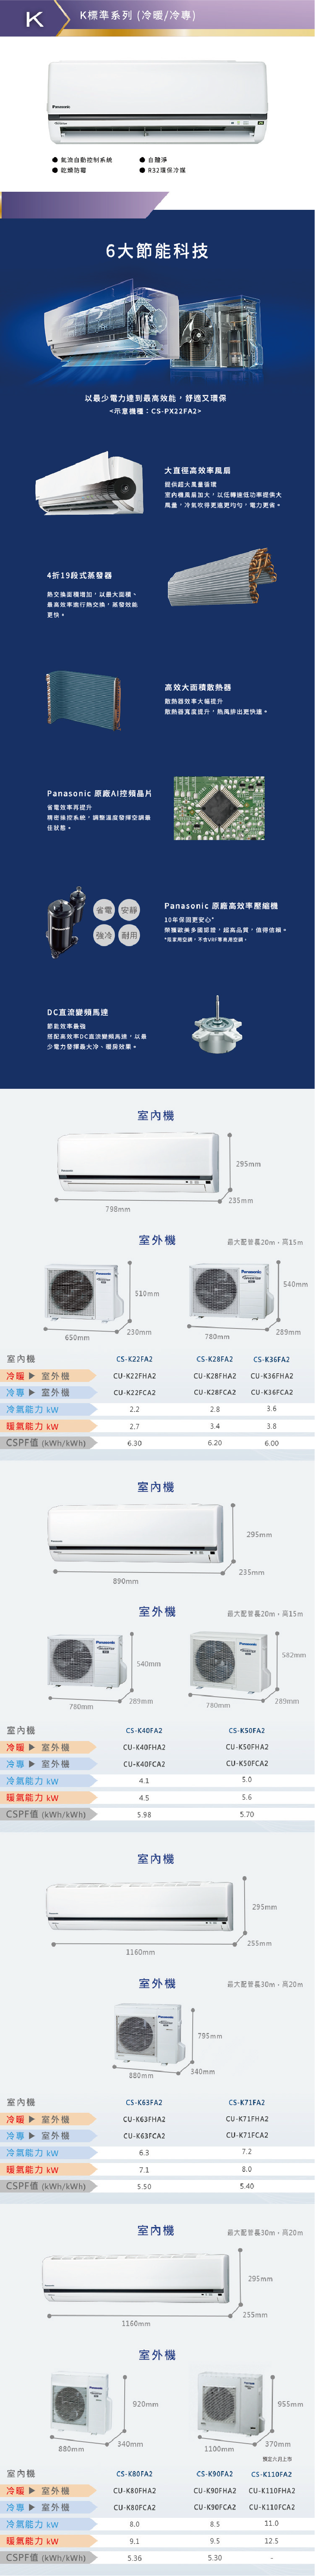 CU-K40FCA2 7坪適用 K系列 一對一 分離式 變頻 冷專 冷氣 CS-K40FA2